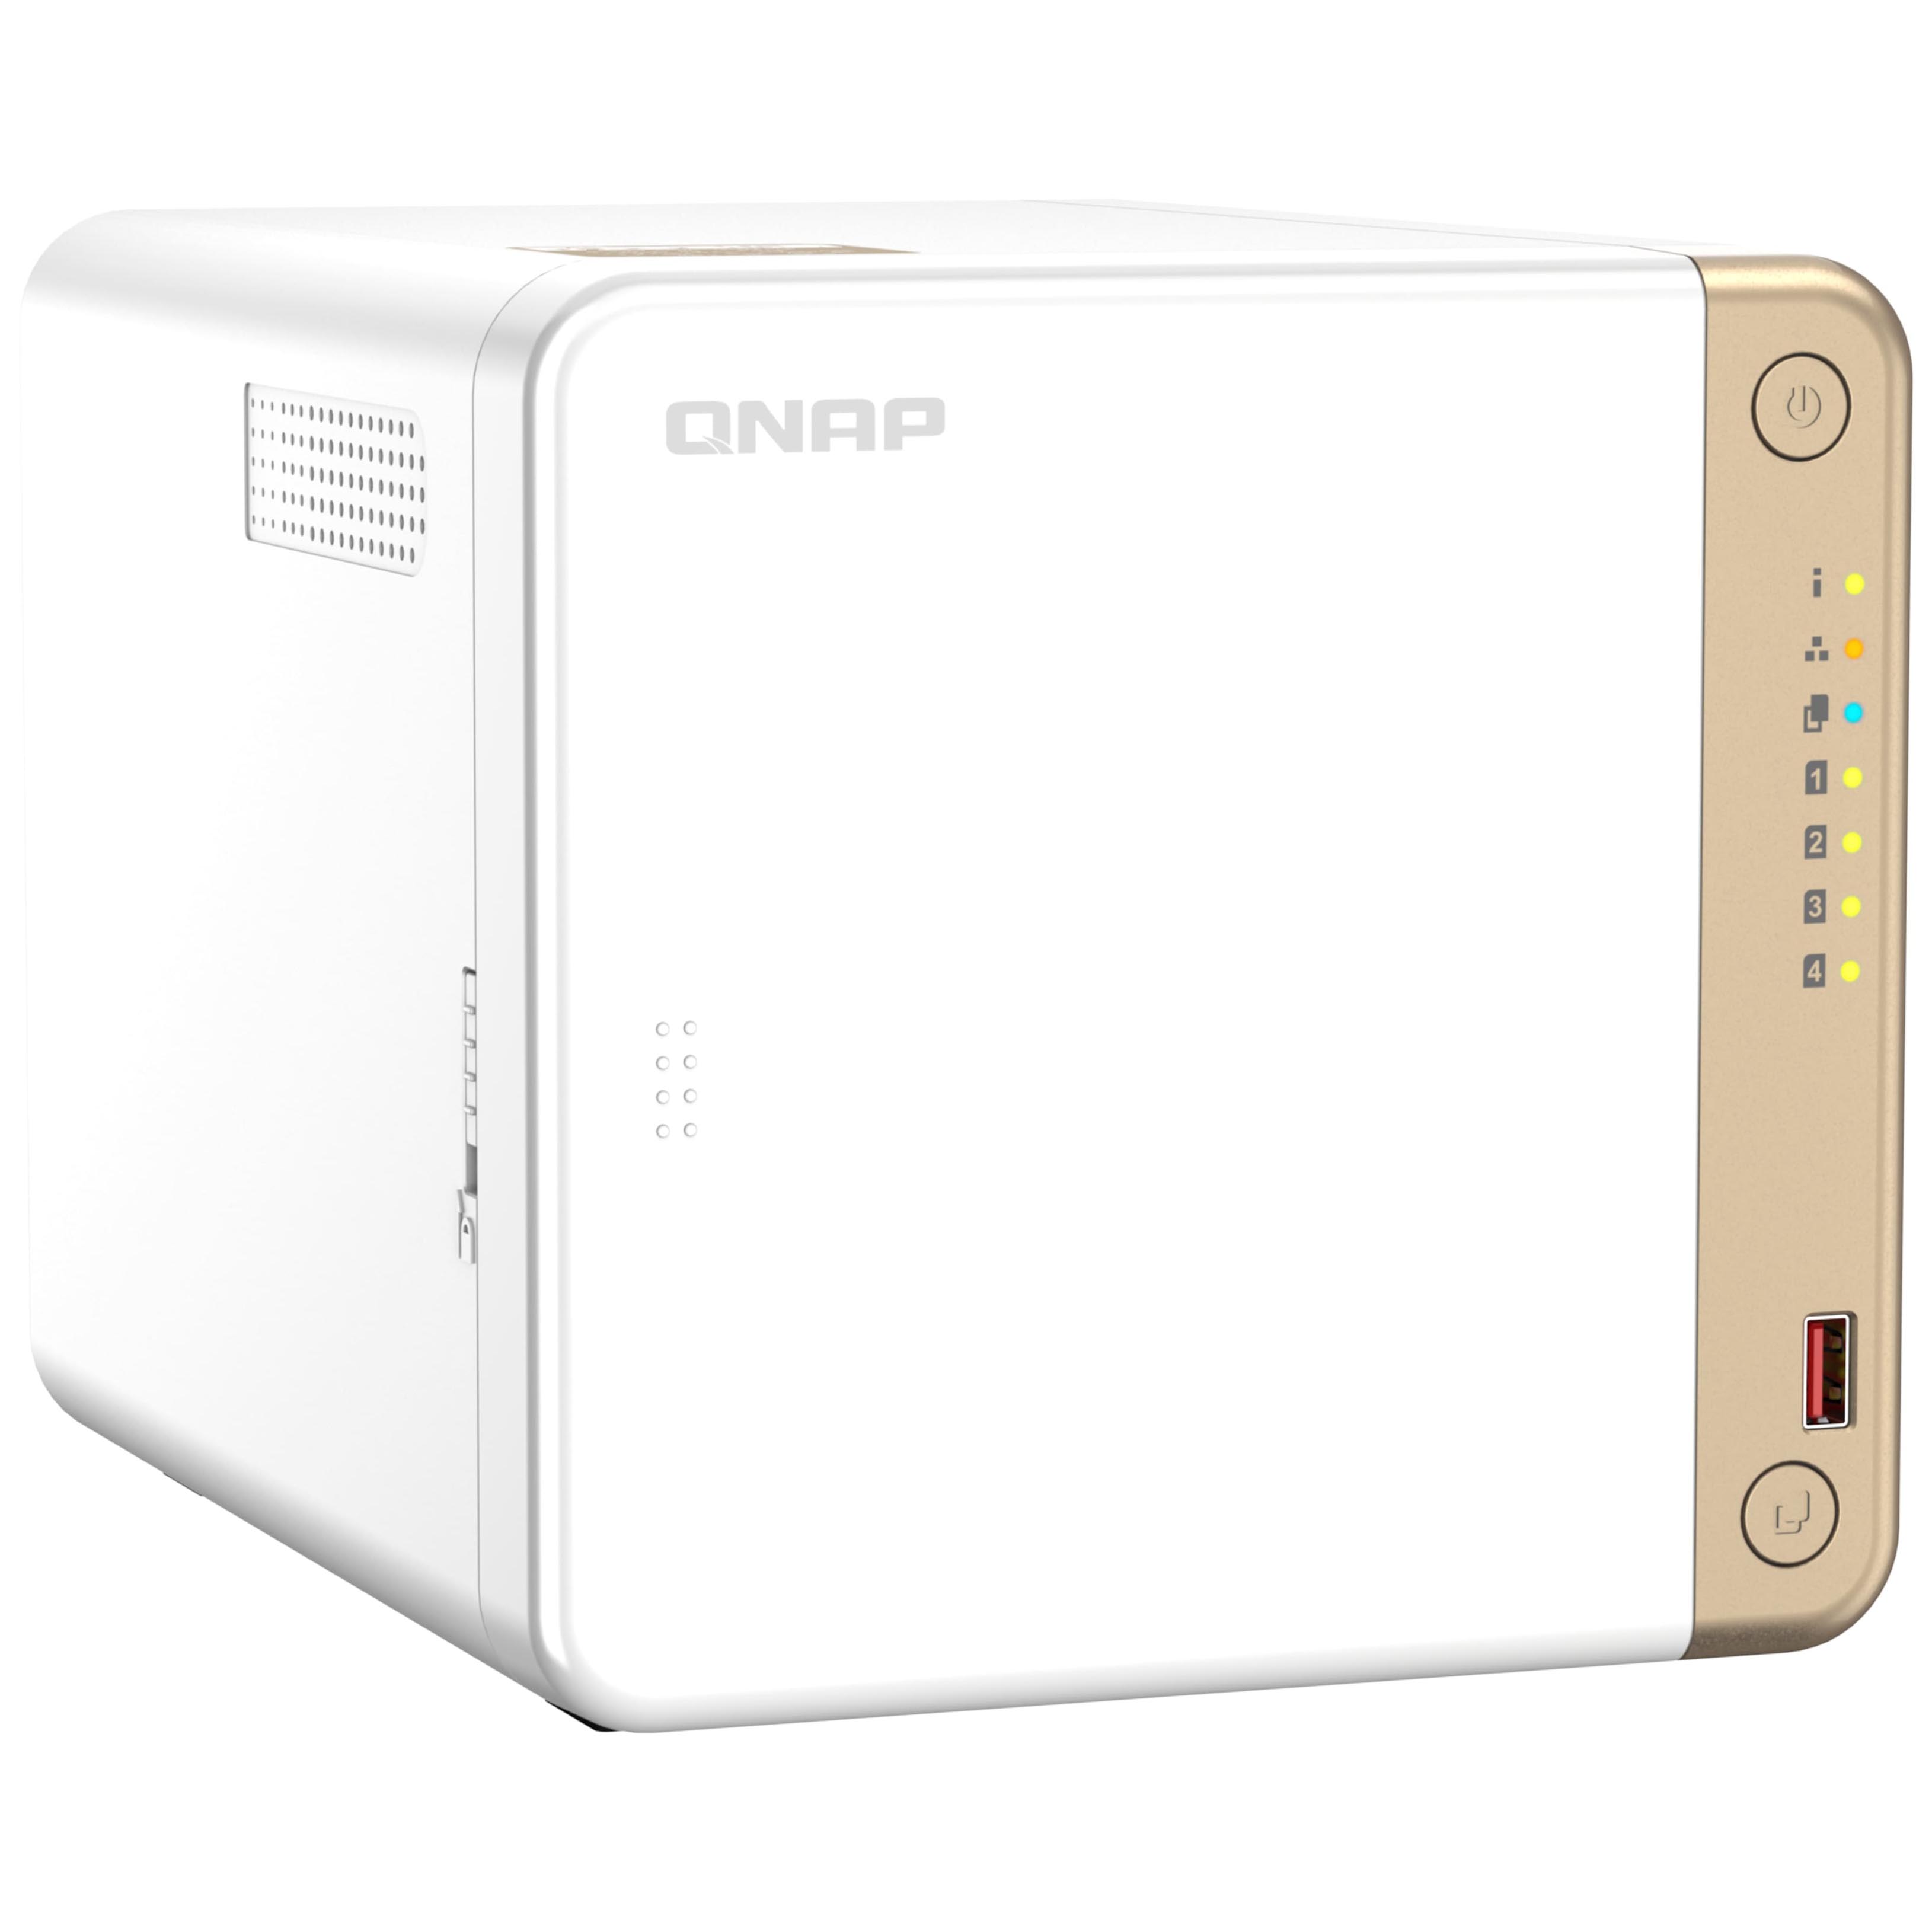 Сетевое хранилище QNAP TS-462 Nas, 4 отсека, без дисков, белый сетевое хранилище nas qnap ts 231p3 2g 2 bay